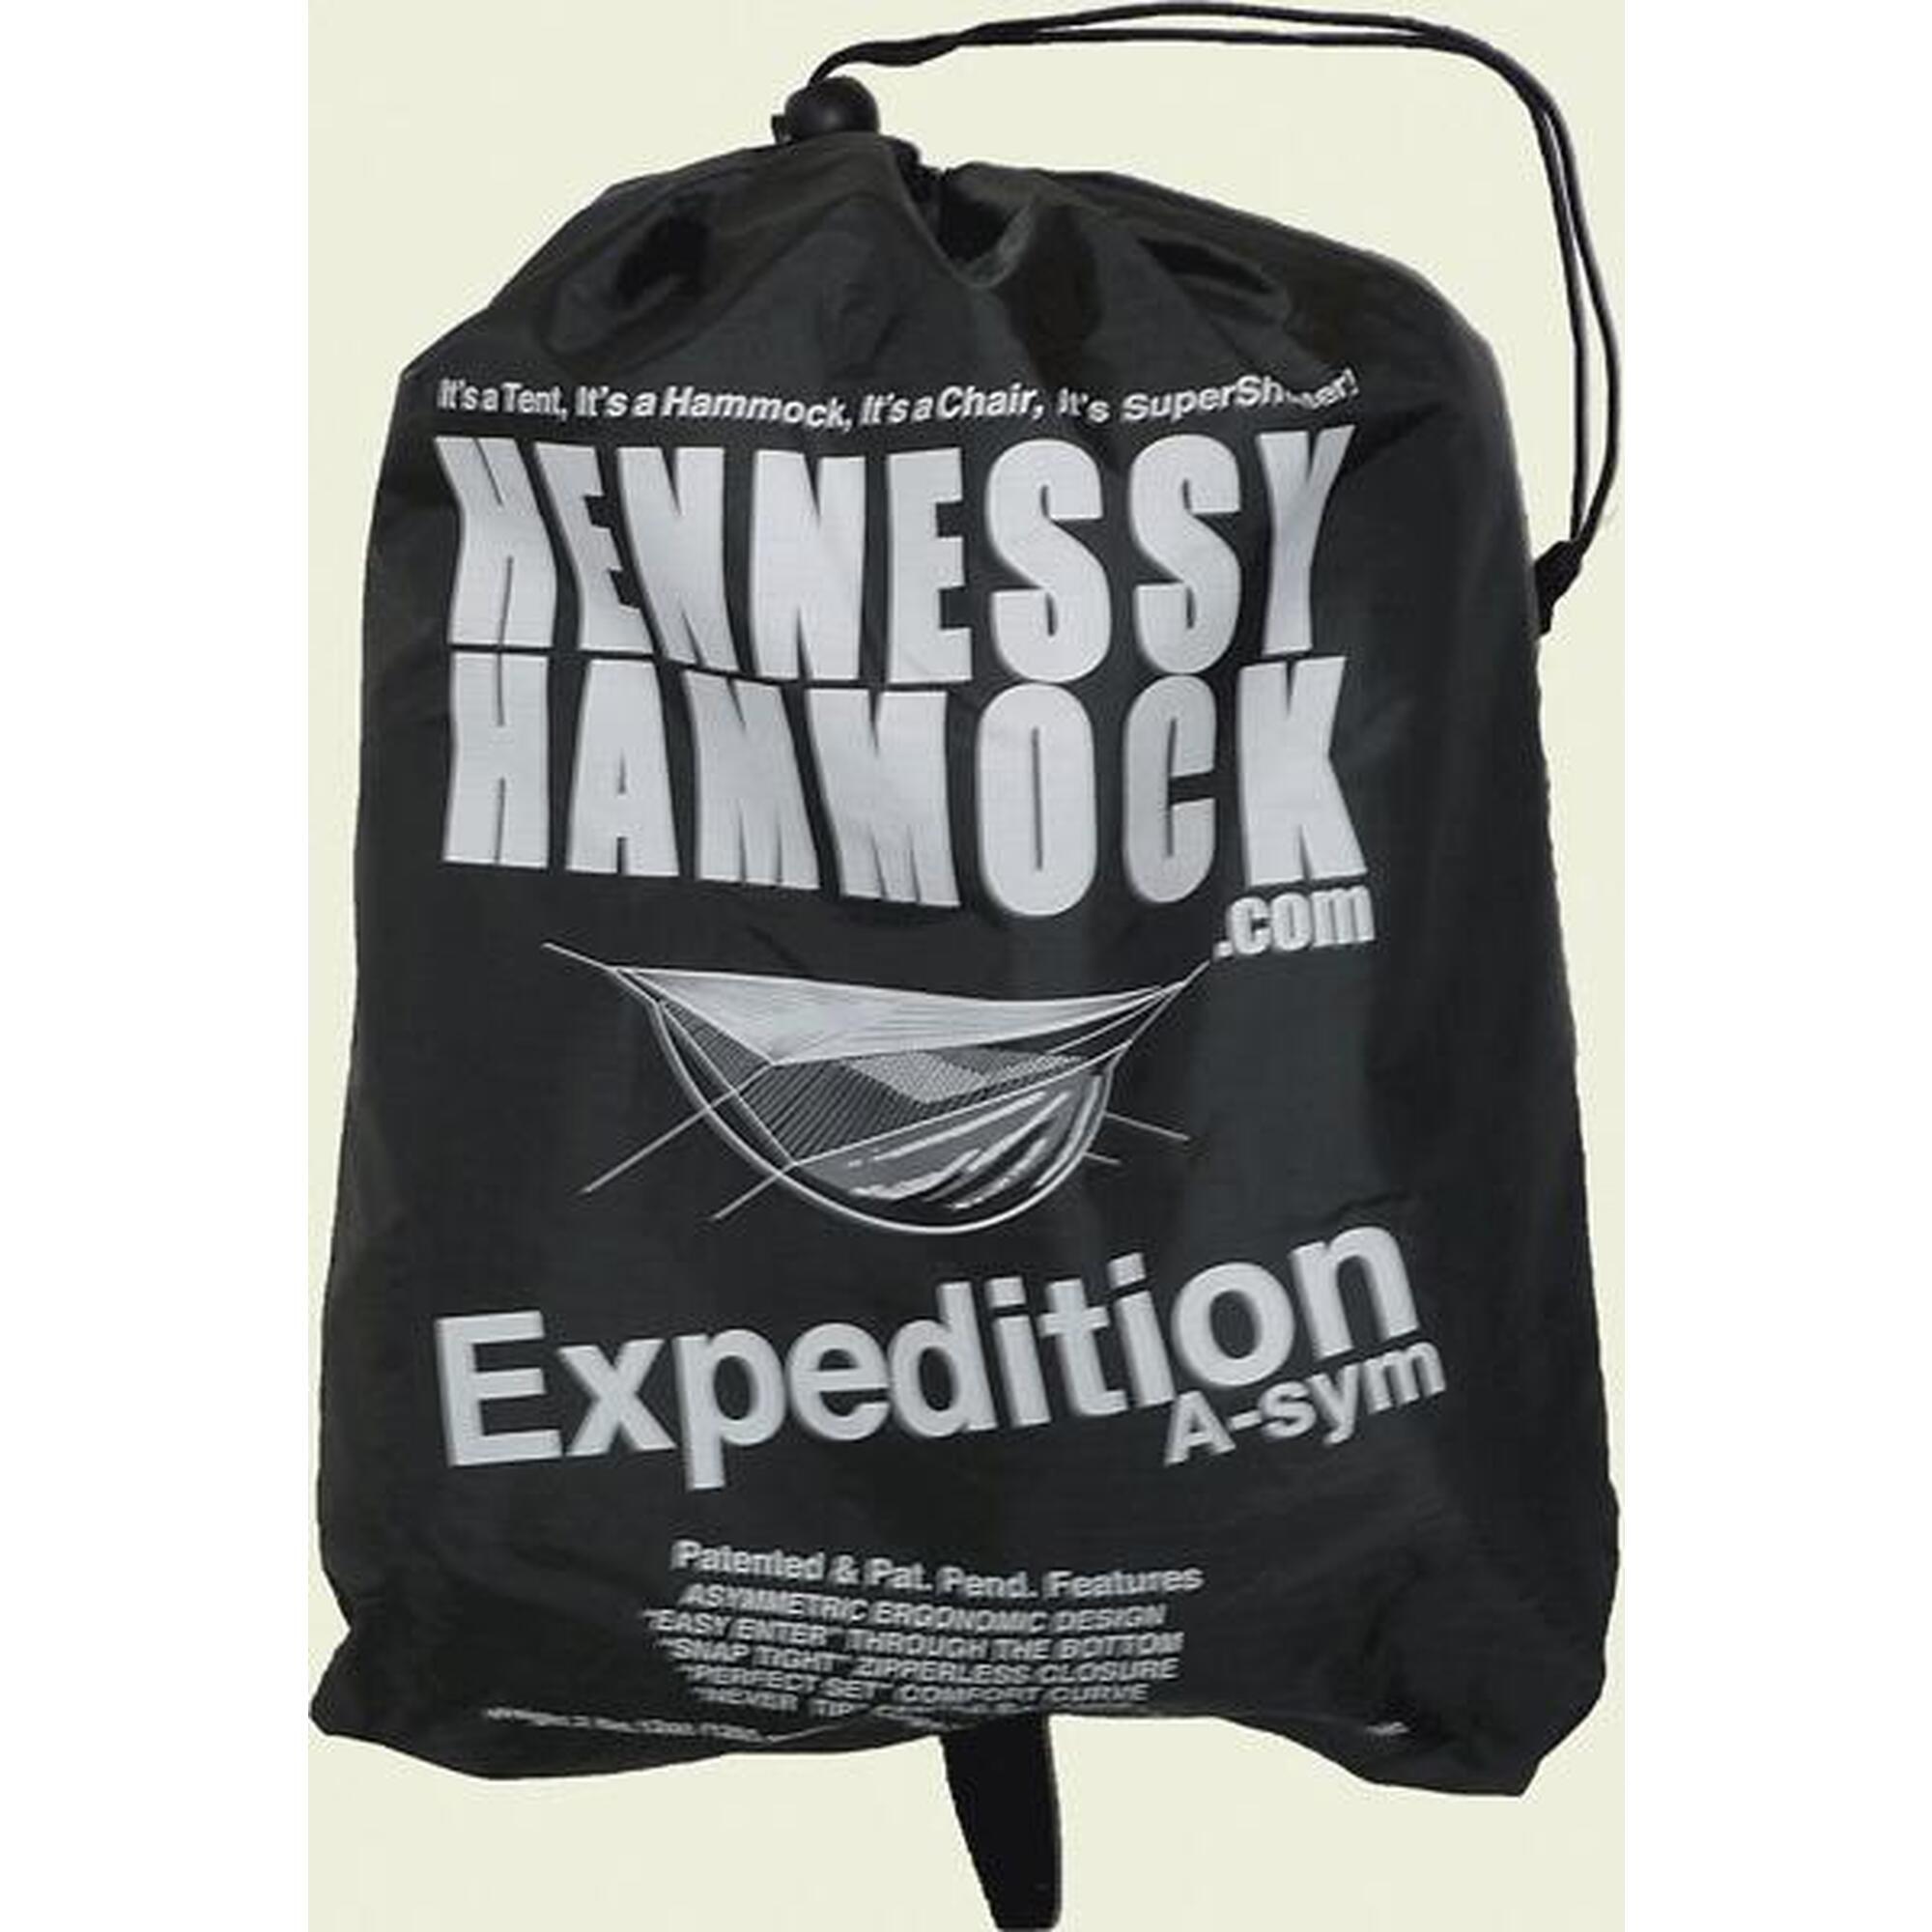 Hennessy Hammock Expedition ZIP - Expédition ZIP